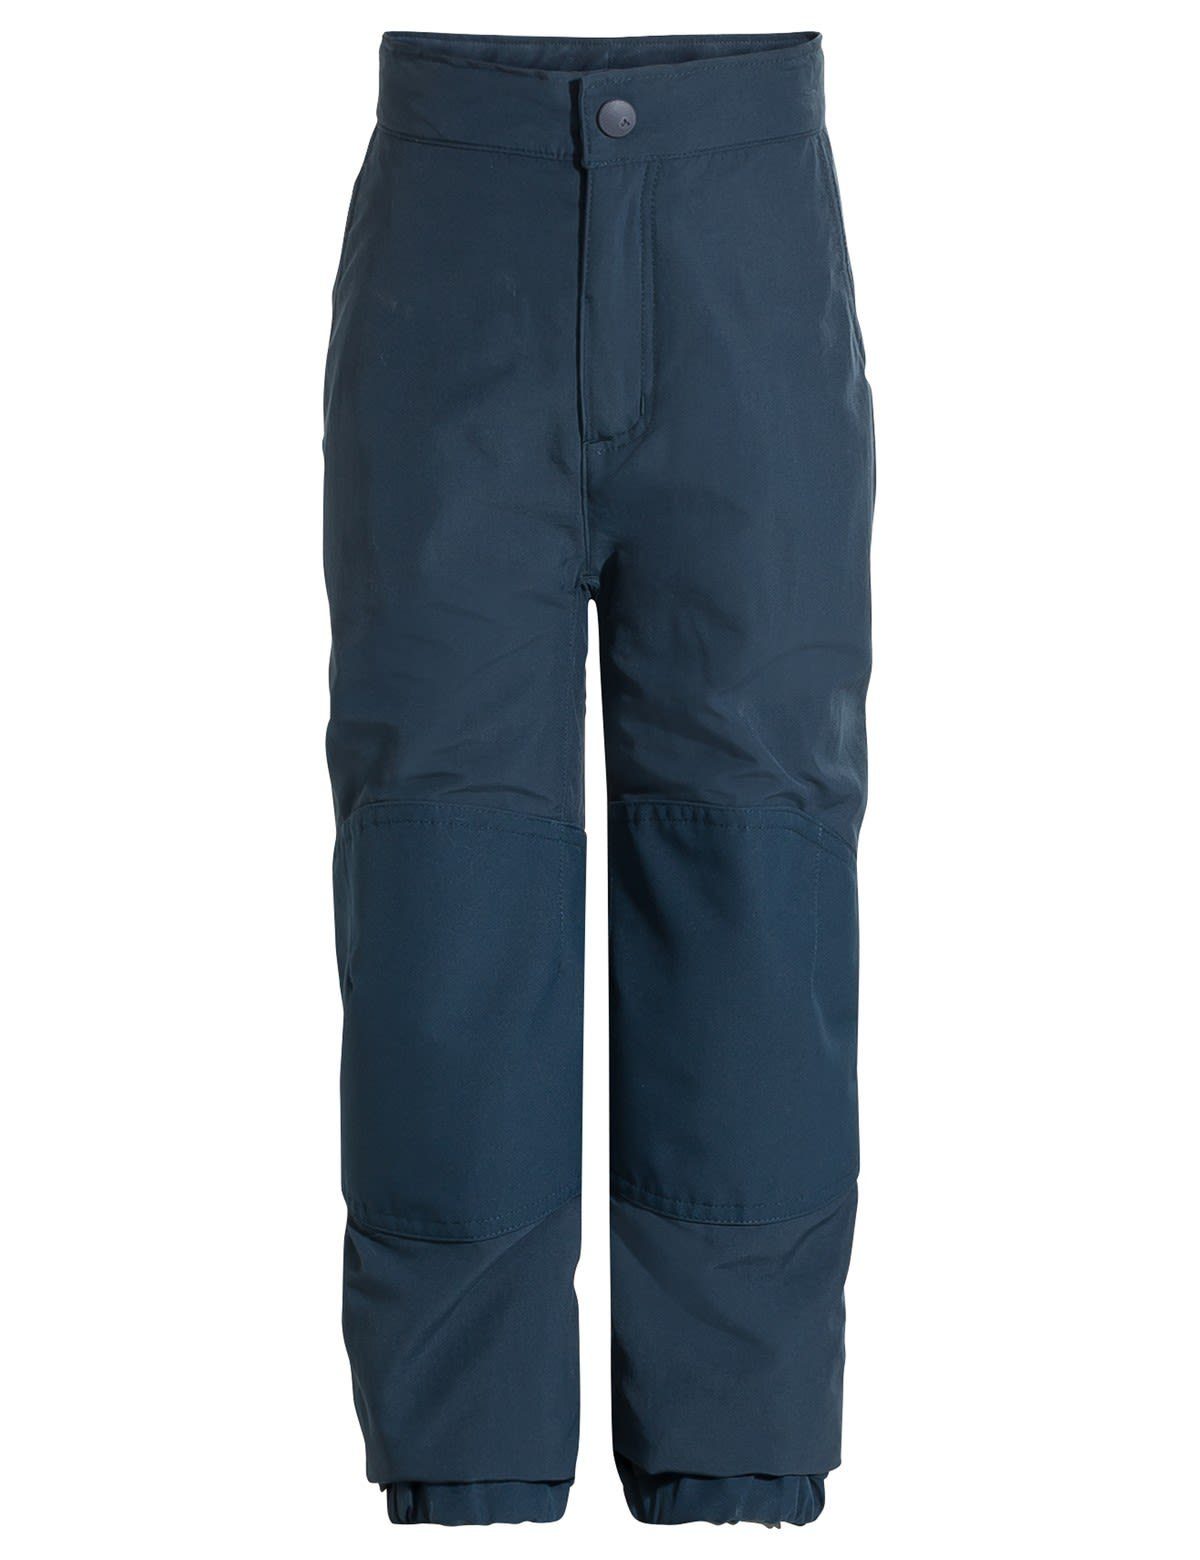 Kids blau Pants & Shorts Hose Warmlined VAUDE Caprea Vaude Ii